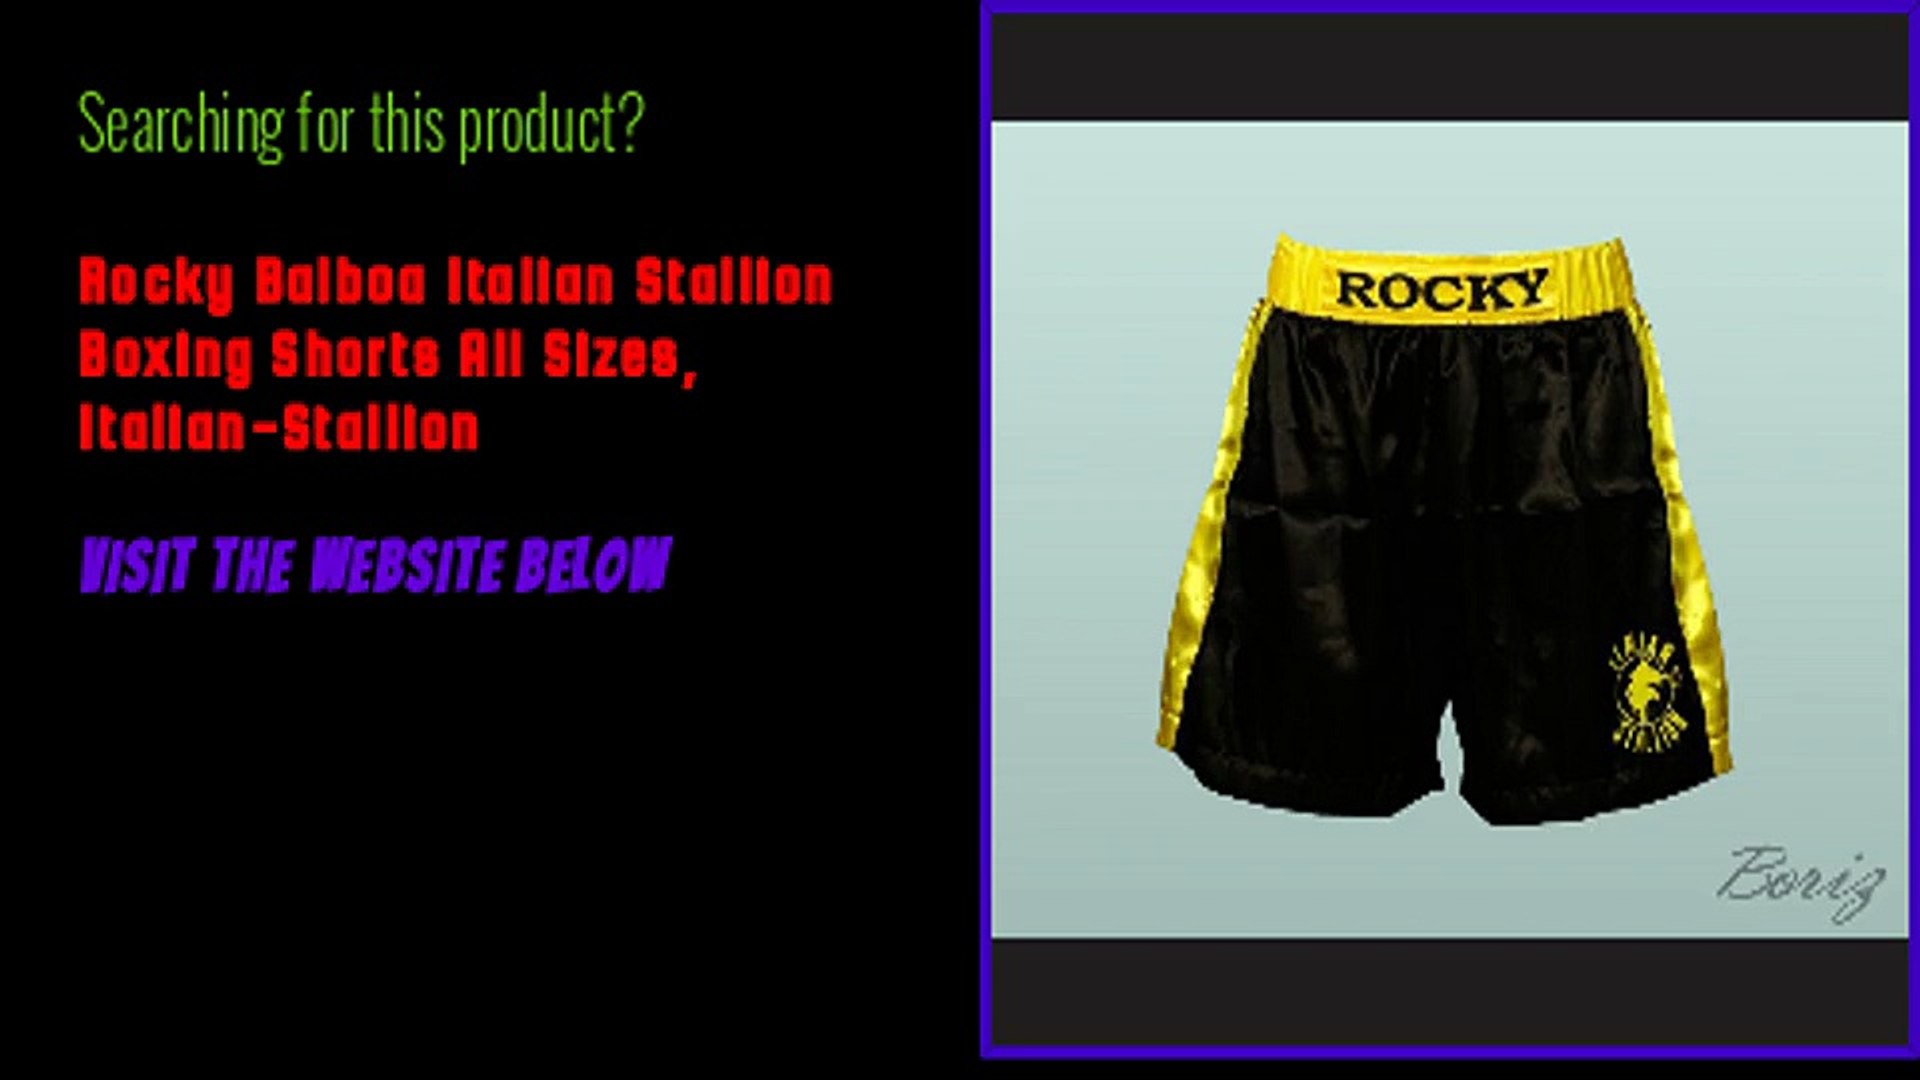 Rocky Balboa Italian Stallion Boxing Shorts All Sizes, Italian-Stallion